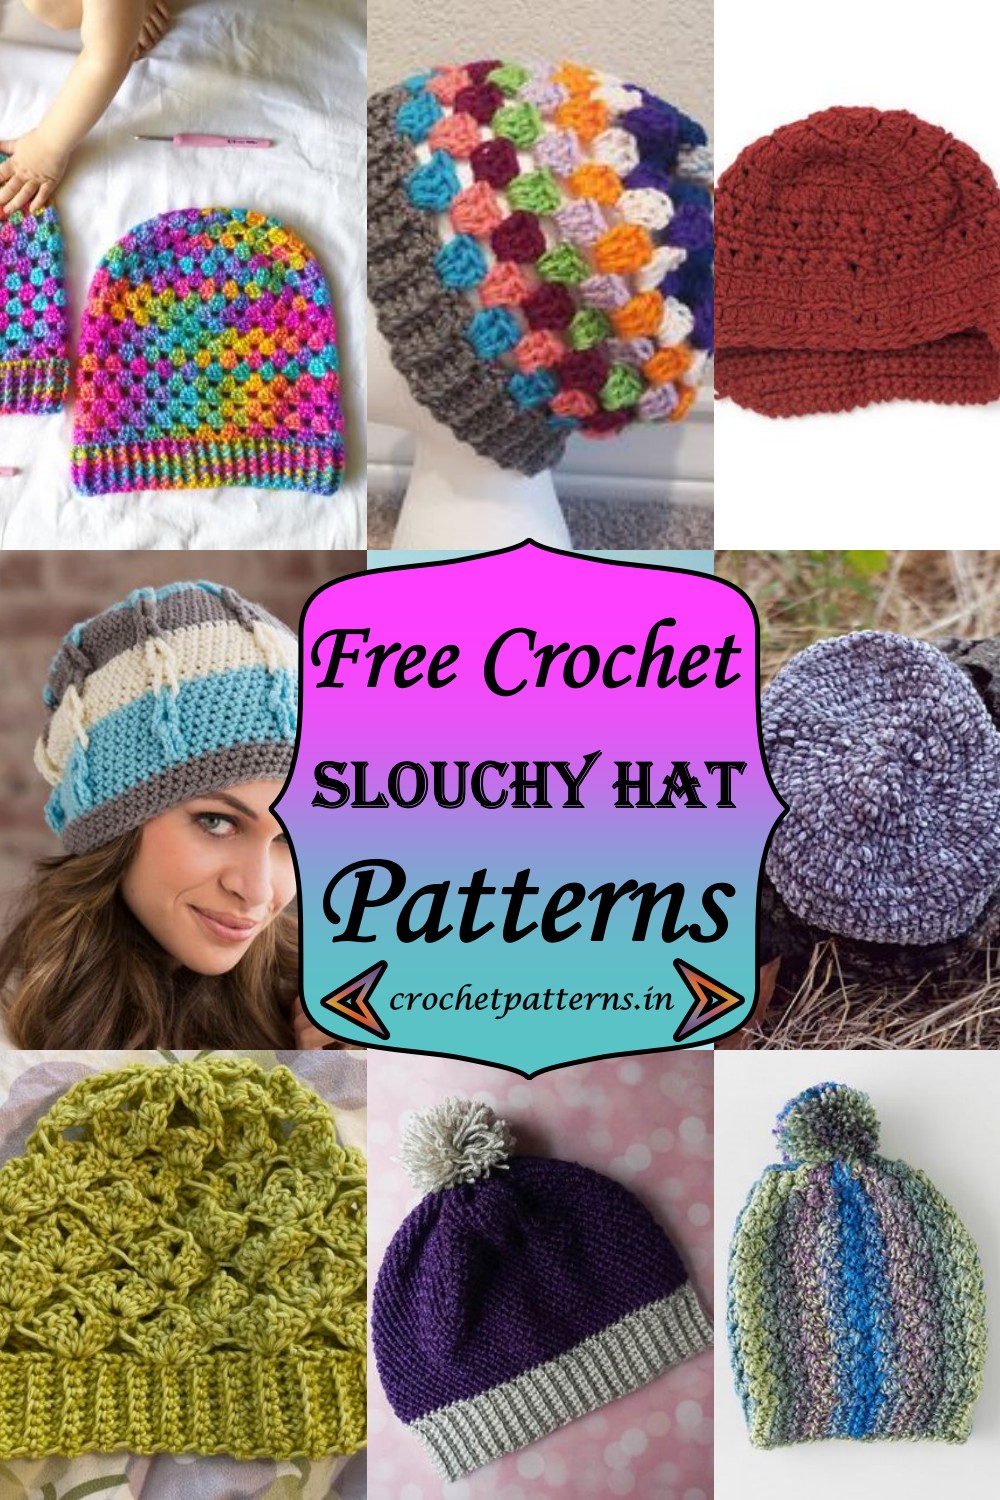  Free Crochet Slouchy Hat Patterns